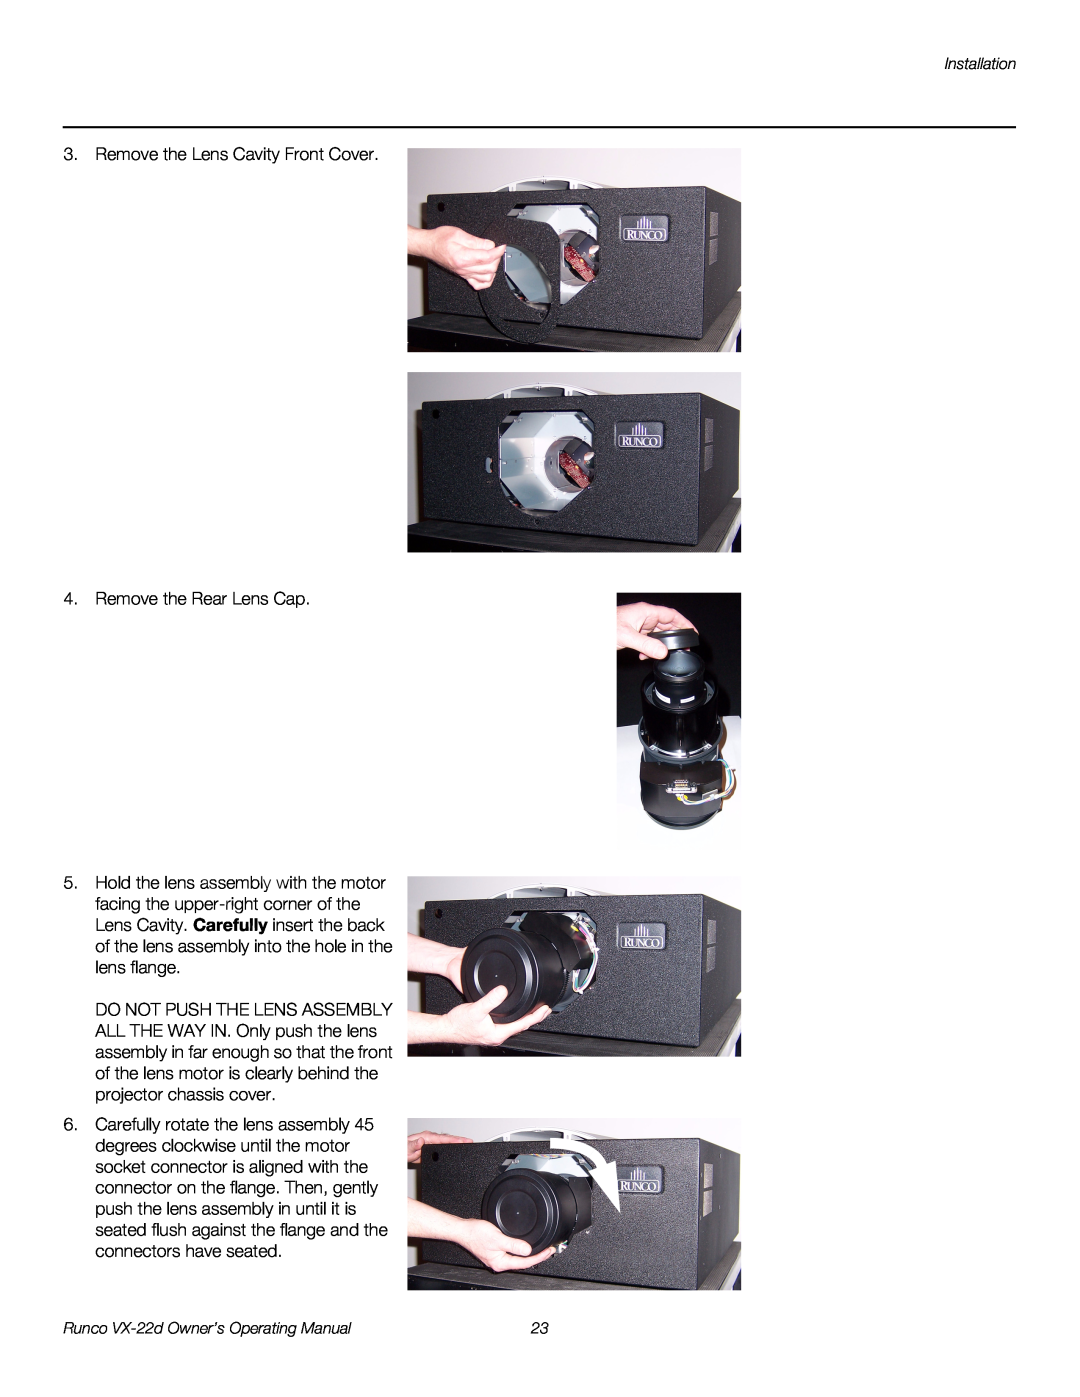 Runco VX-22D manual Remove the Lens Cavity Front Cover 4. Remove the Rear Lens Cap 